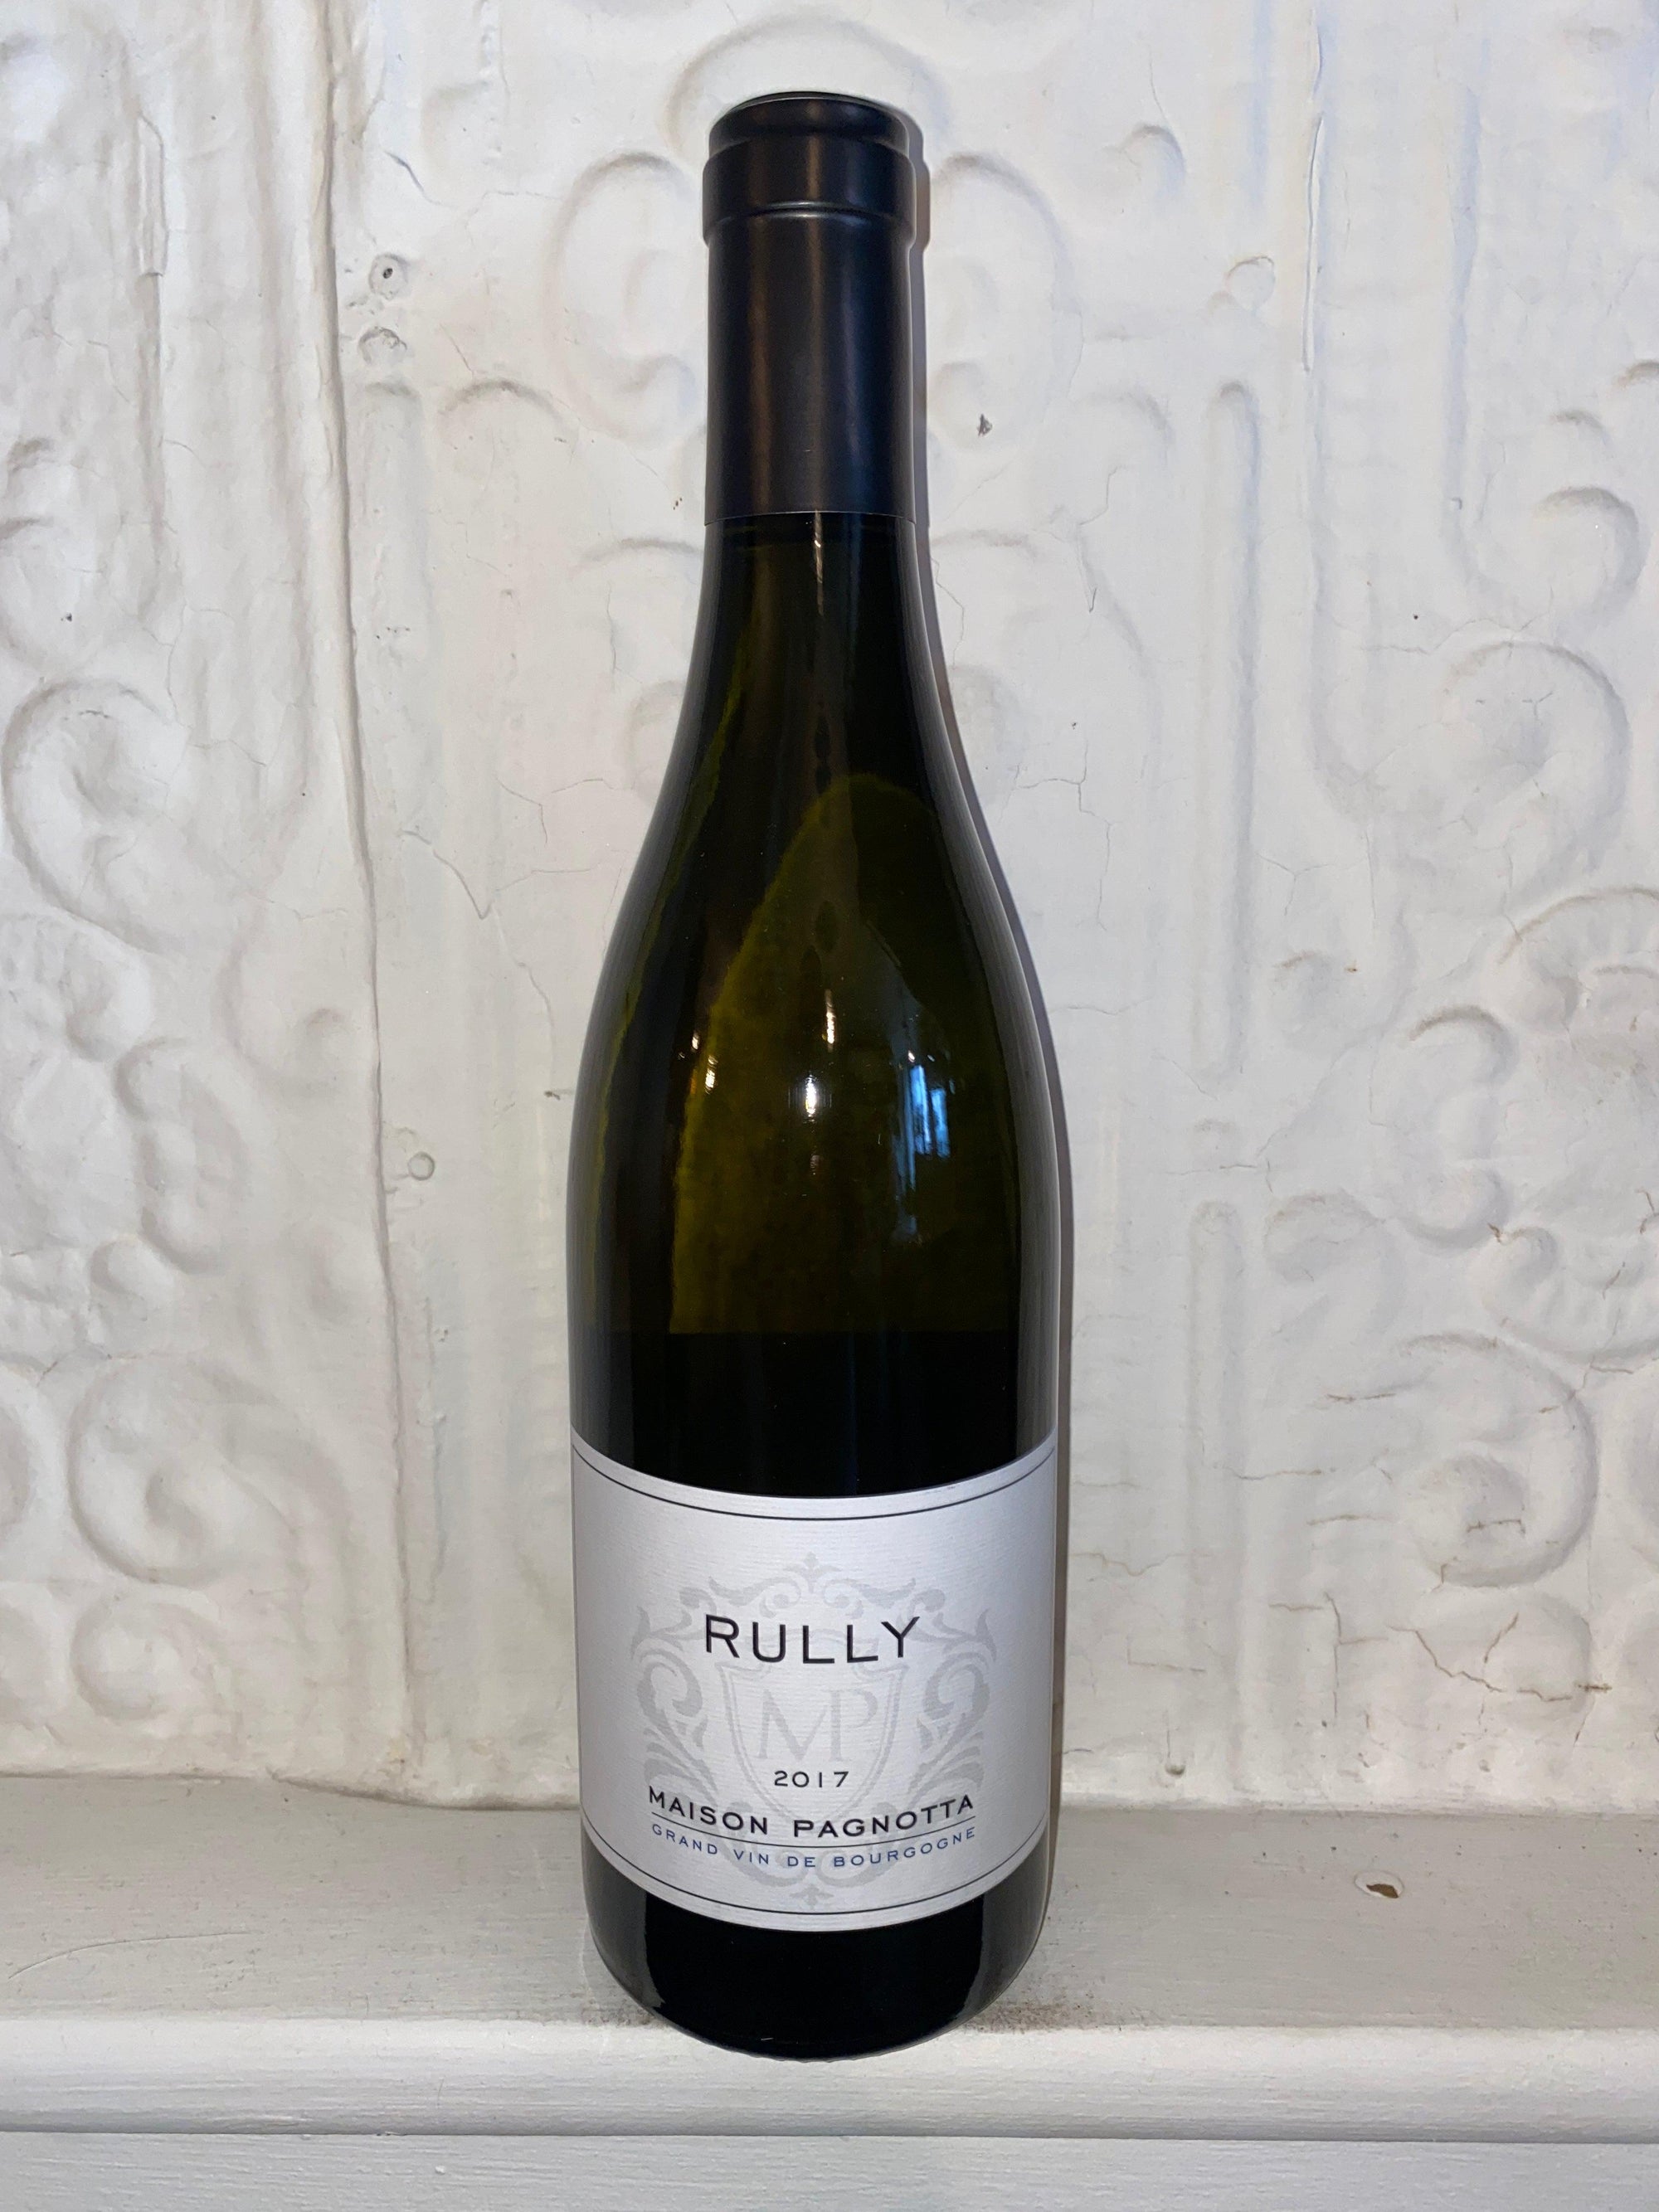 Rully, Maison Pagnotta 2017 (Burgundy, France)-Wine-Bibber & Bell